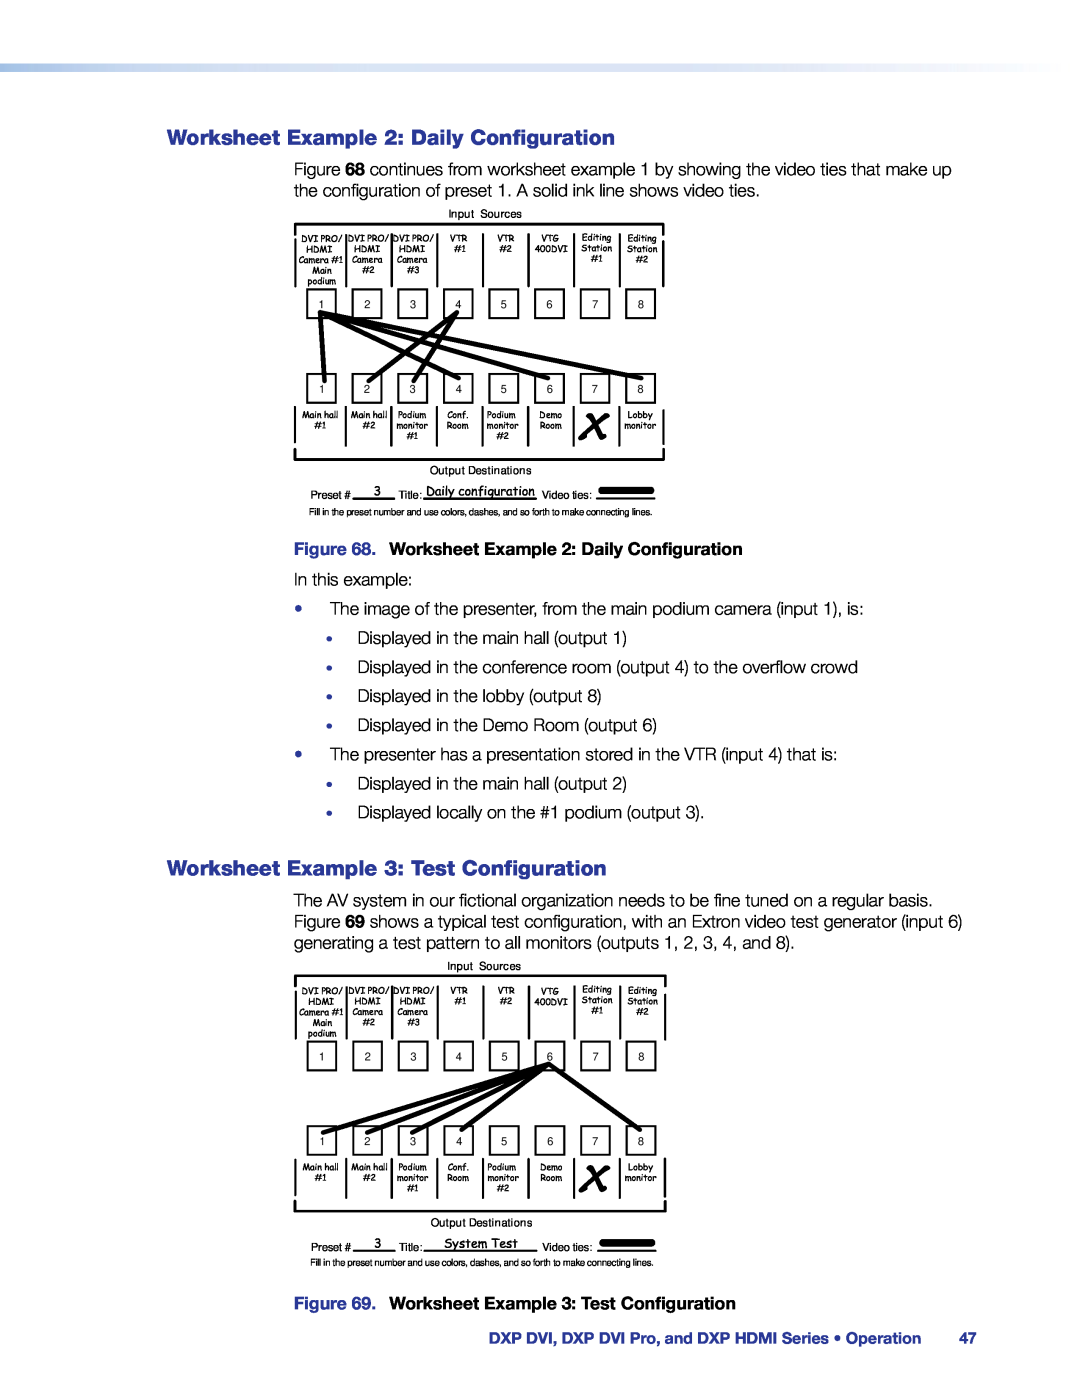 Extron electronic DXP DVI PRO manual Worksheet Example 2 Daily Configuration, Worksheet Example 3 Test Configuration 